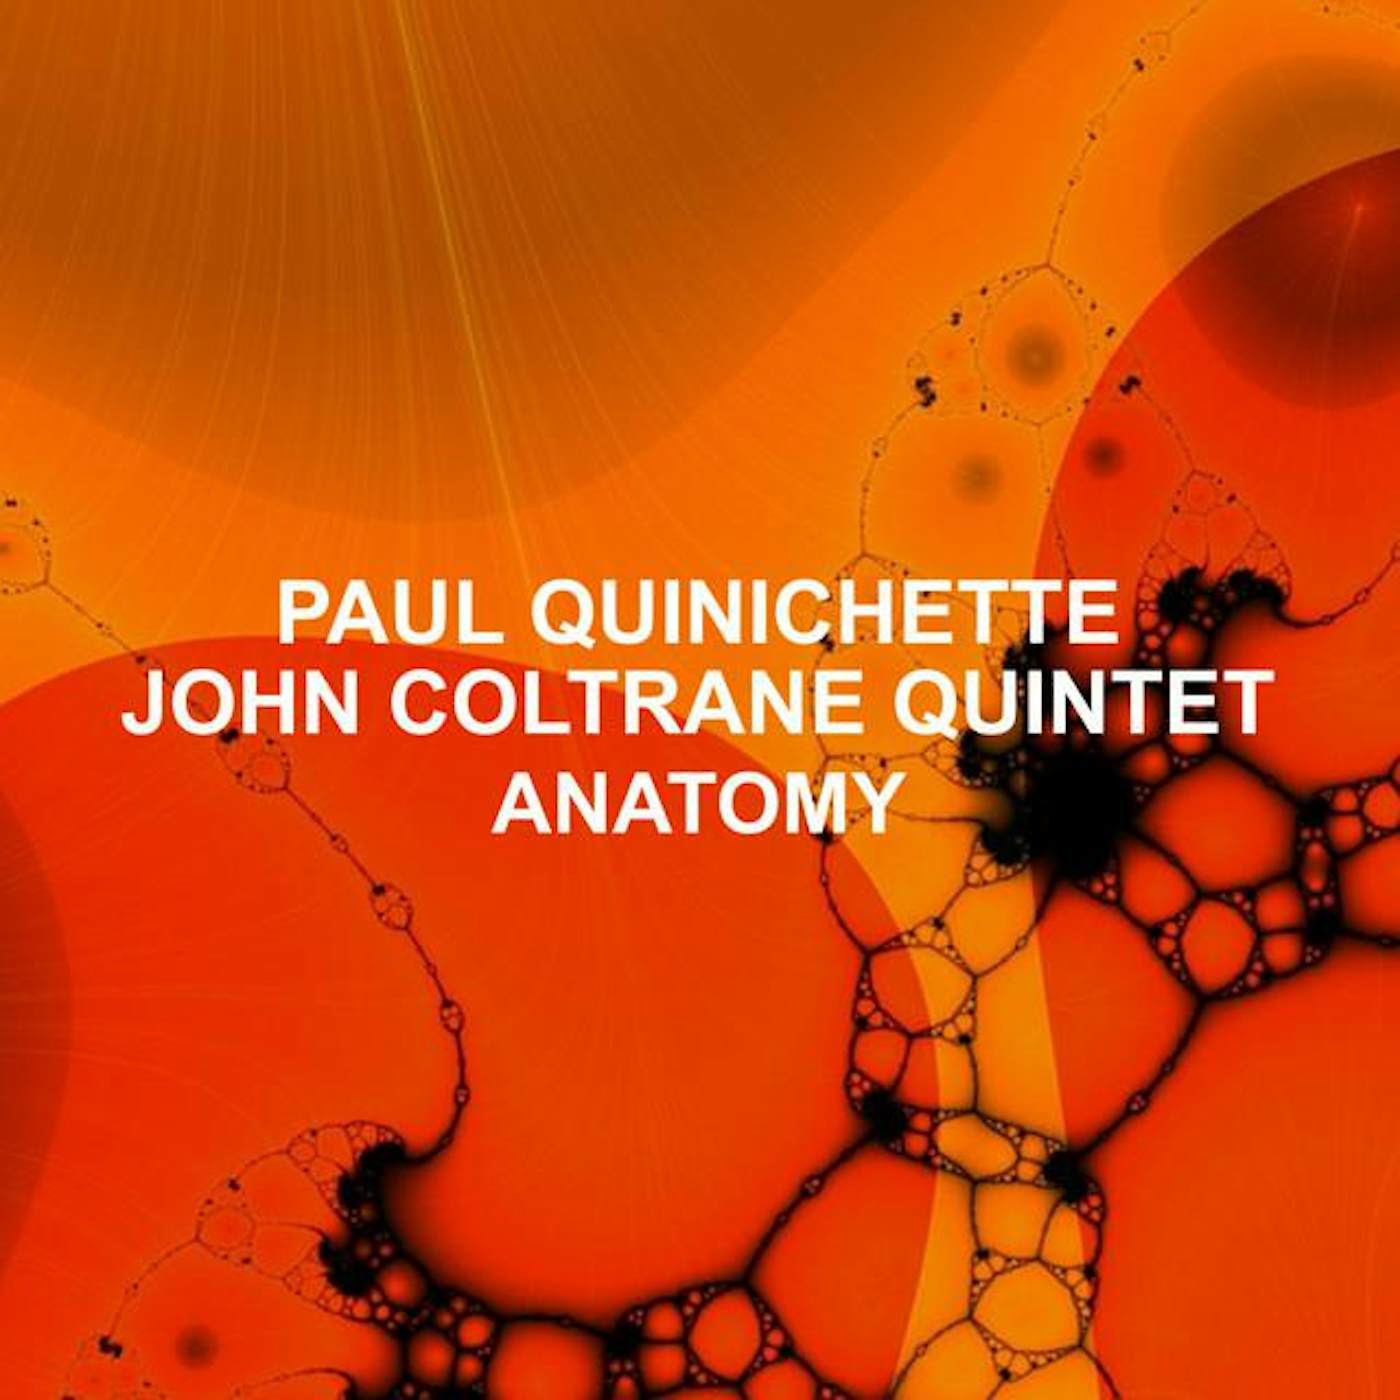 John Coltrane Quintet